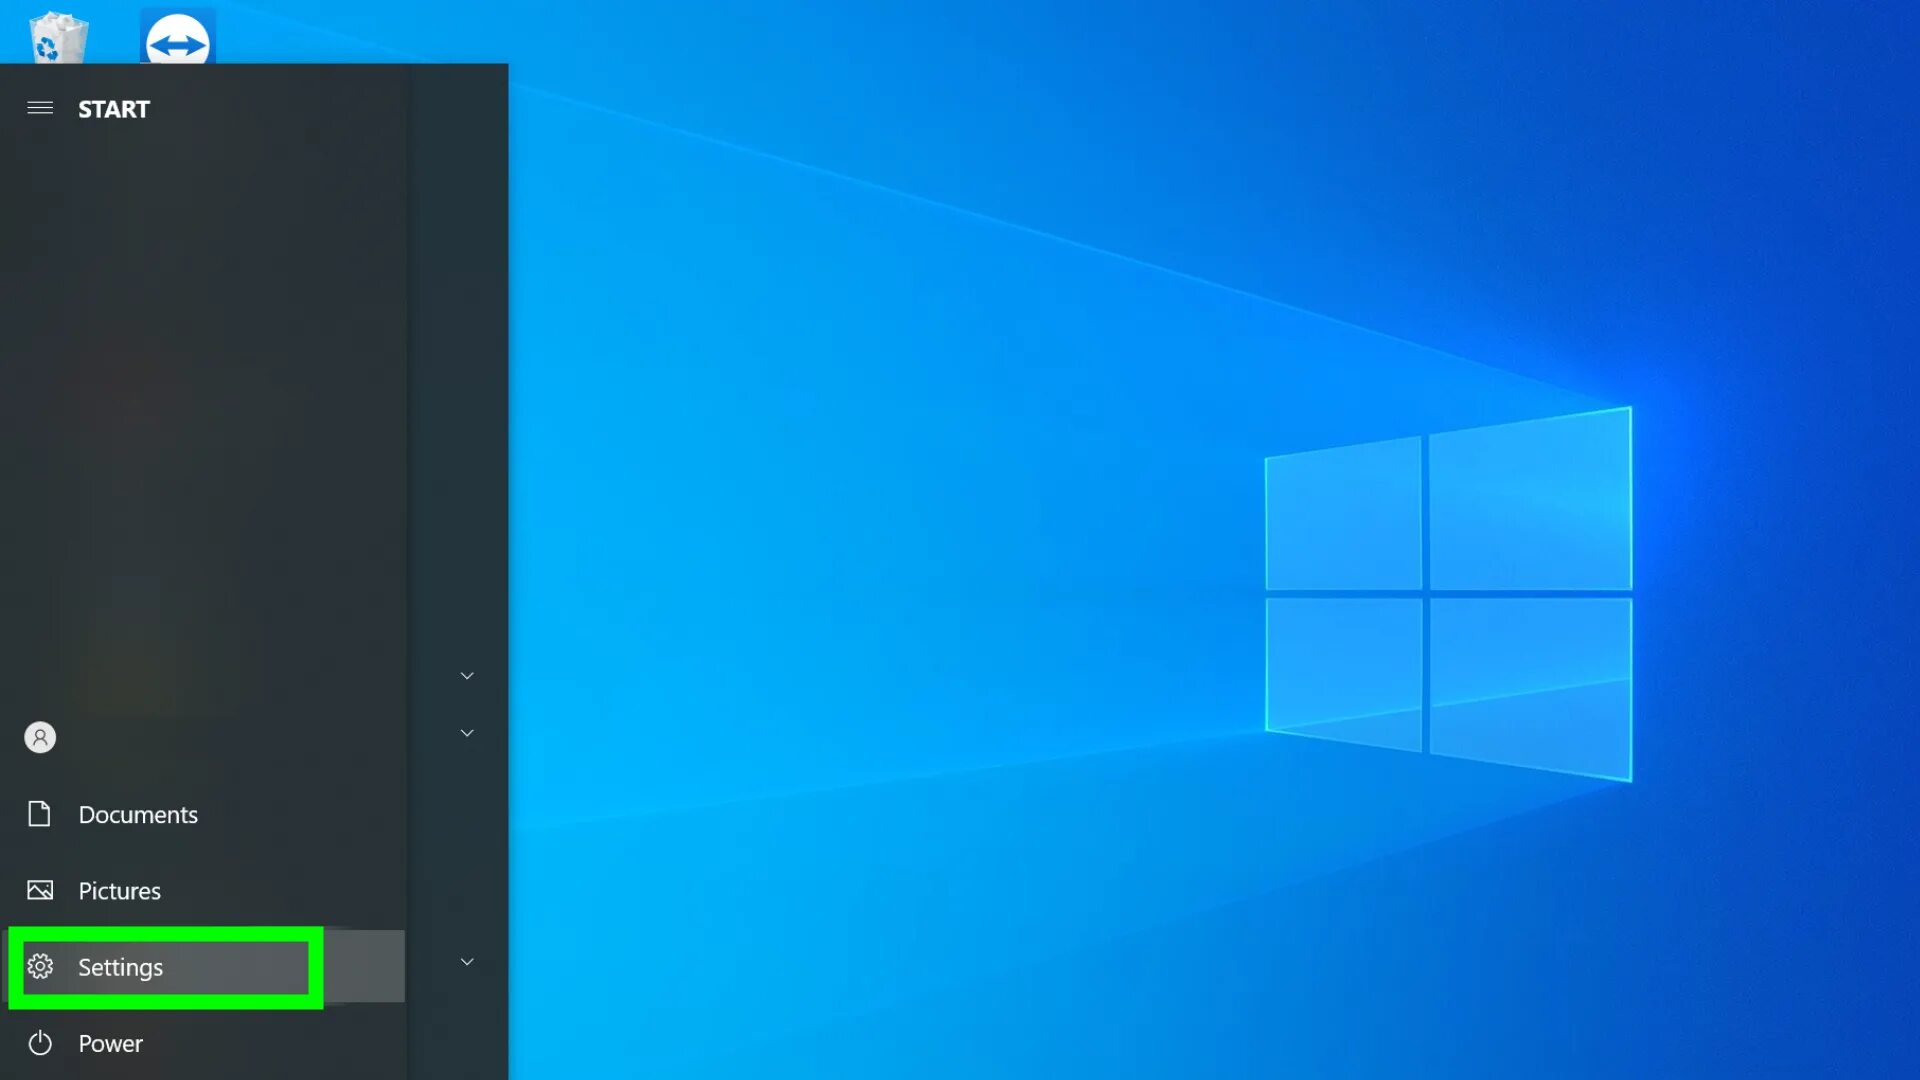 Windows 10 Enterprise 20h2. Win 10 Pro 20h2. Ноутбук на виндовс 10 64 бит. • ОС Microsoft Windows 10 Pro. Производитель windows 10